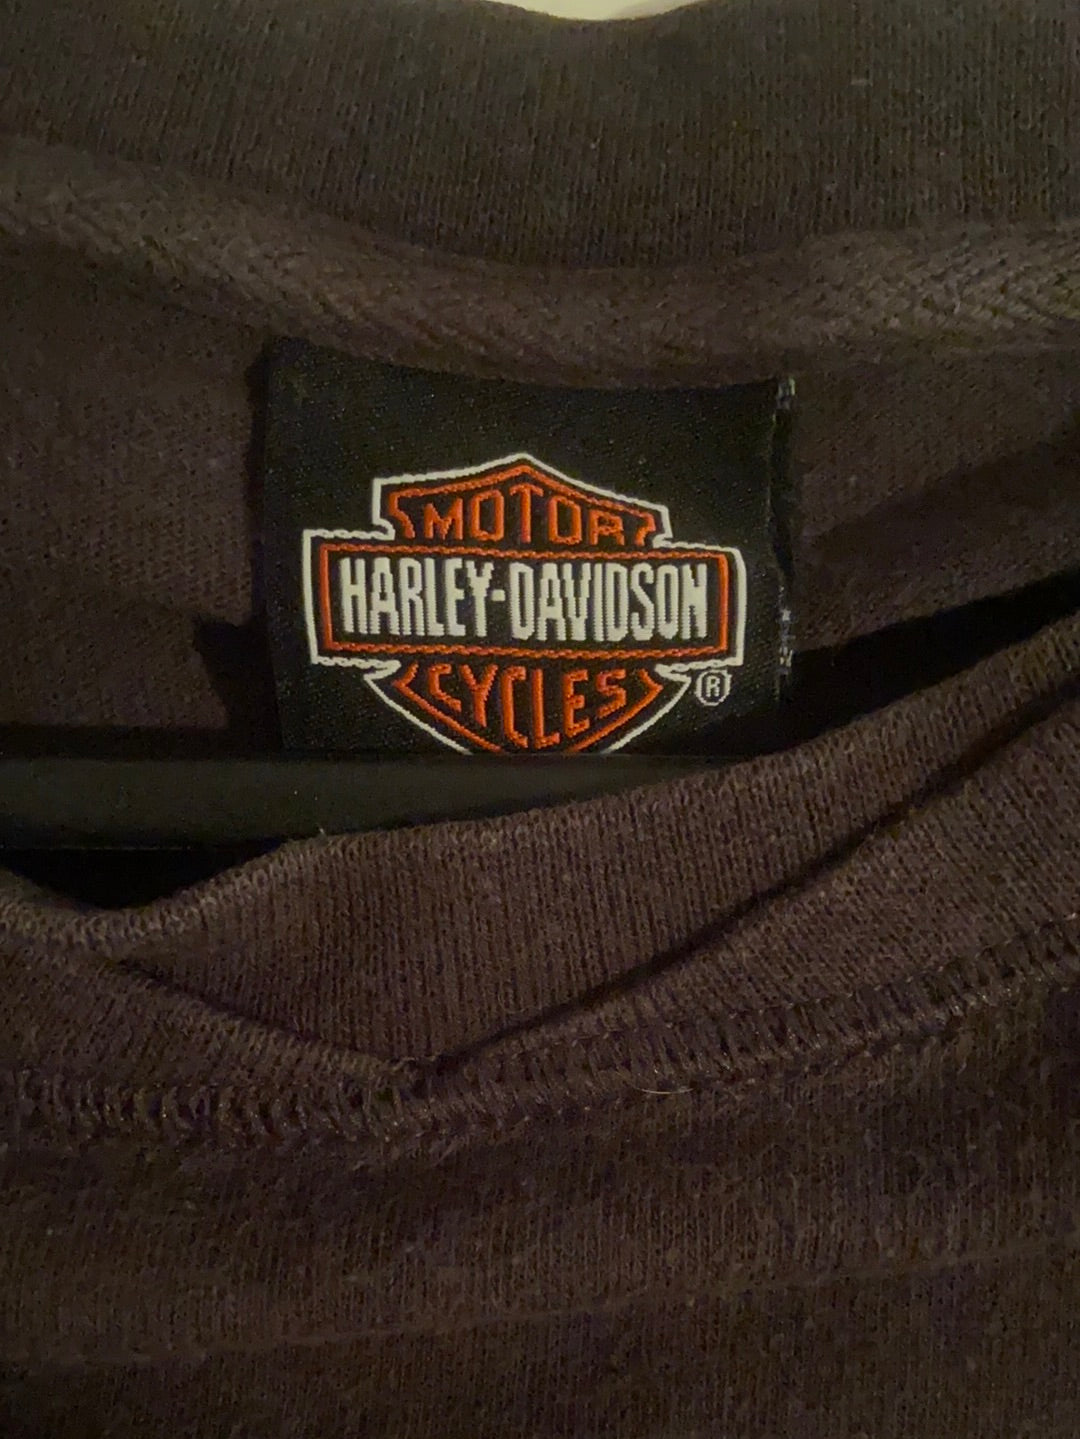 Harley Davidson Tee - Medium